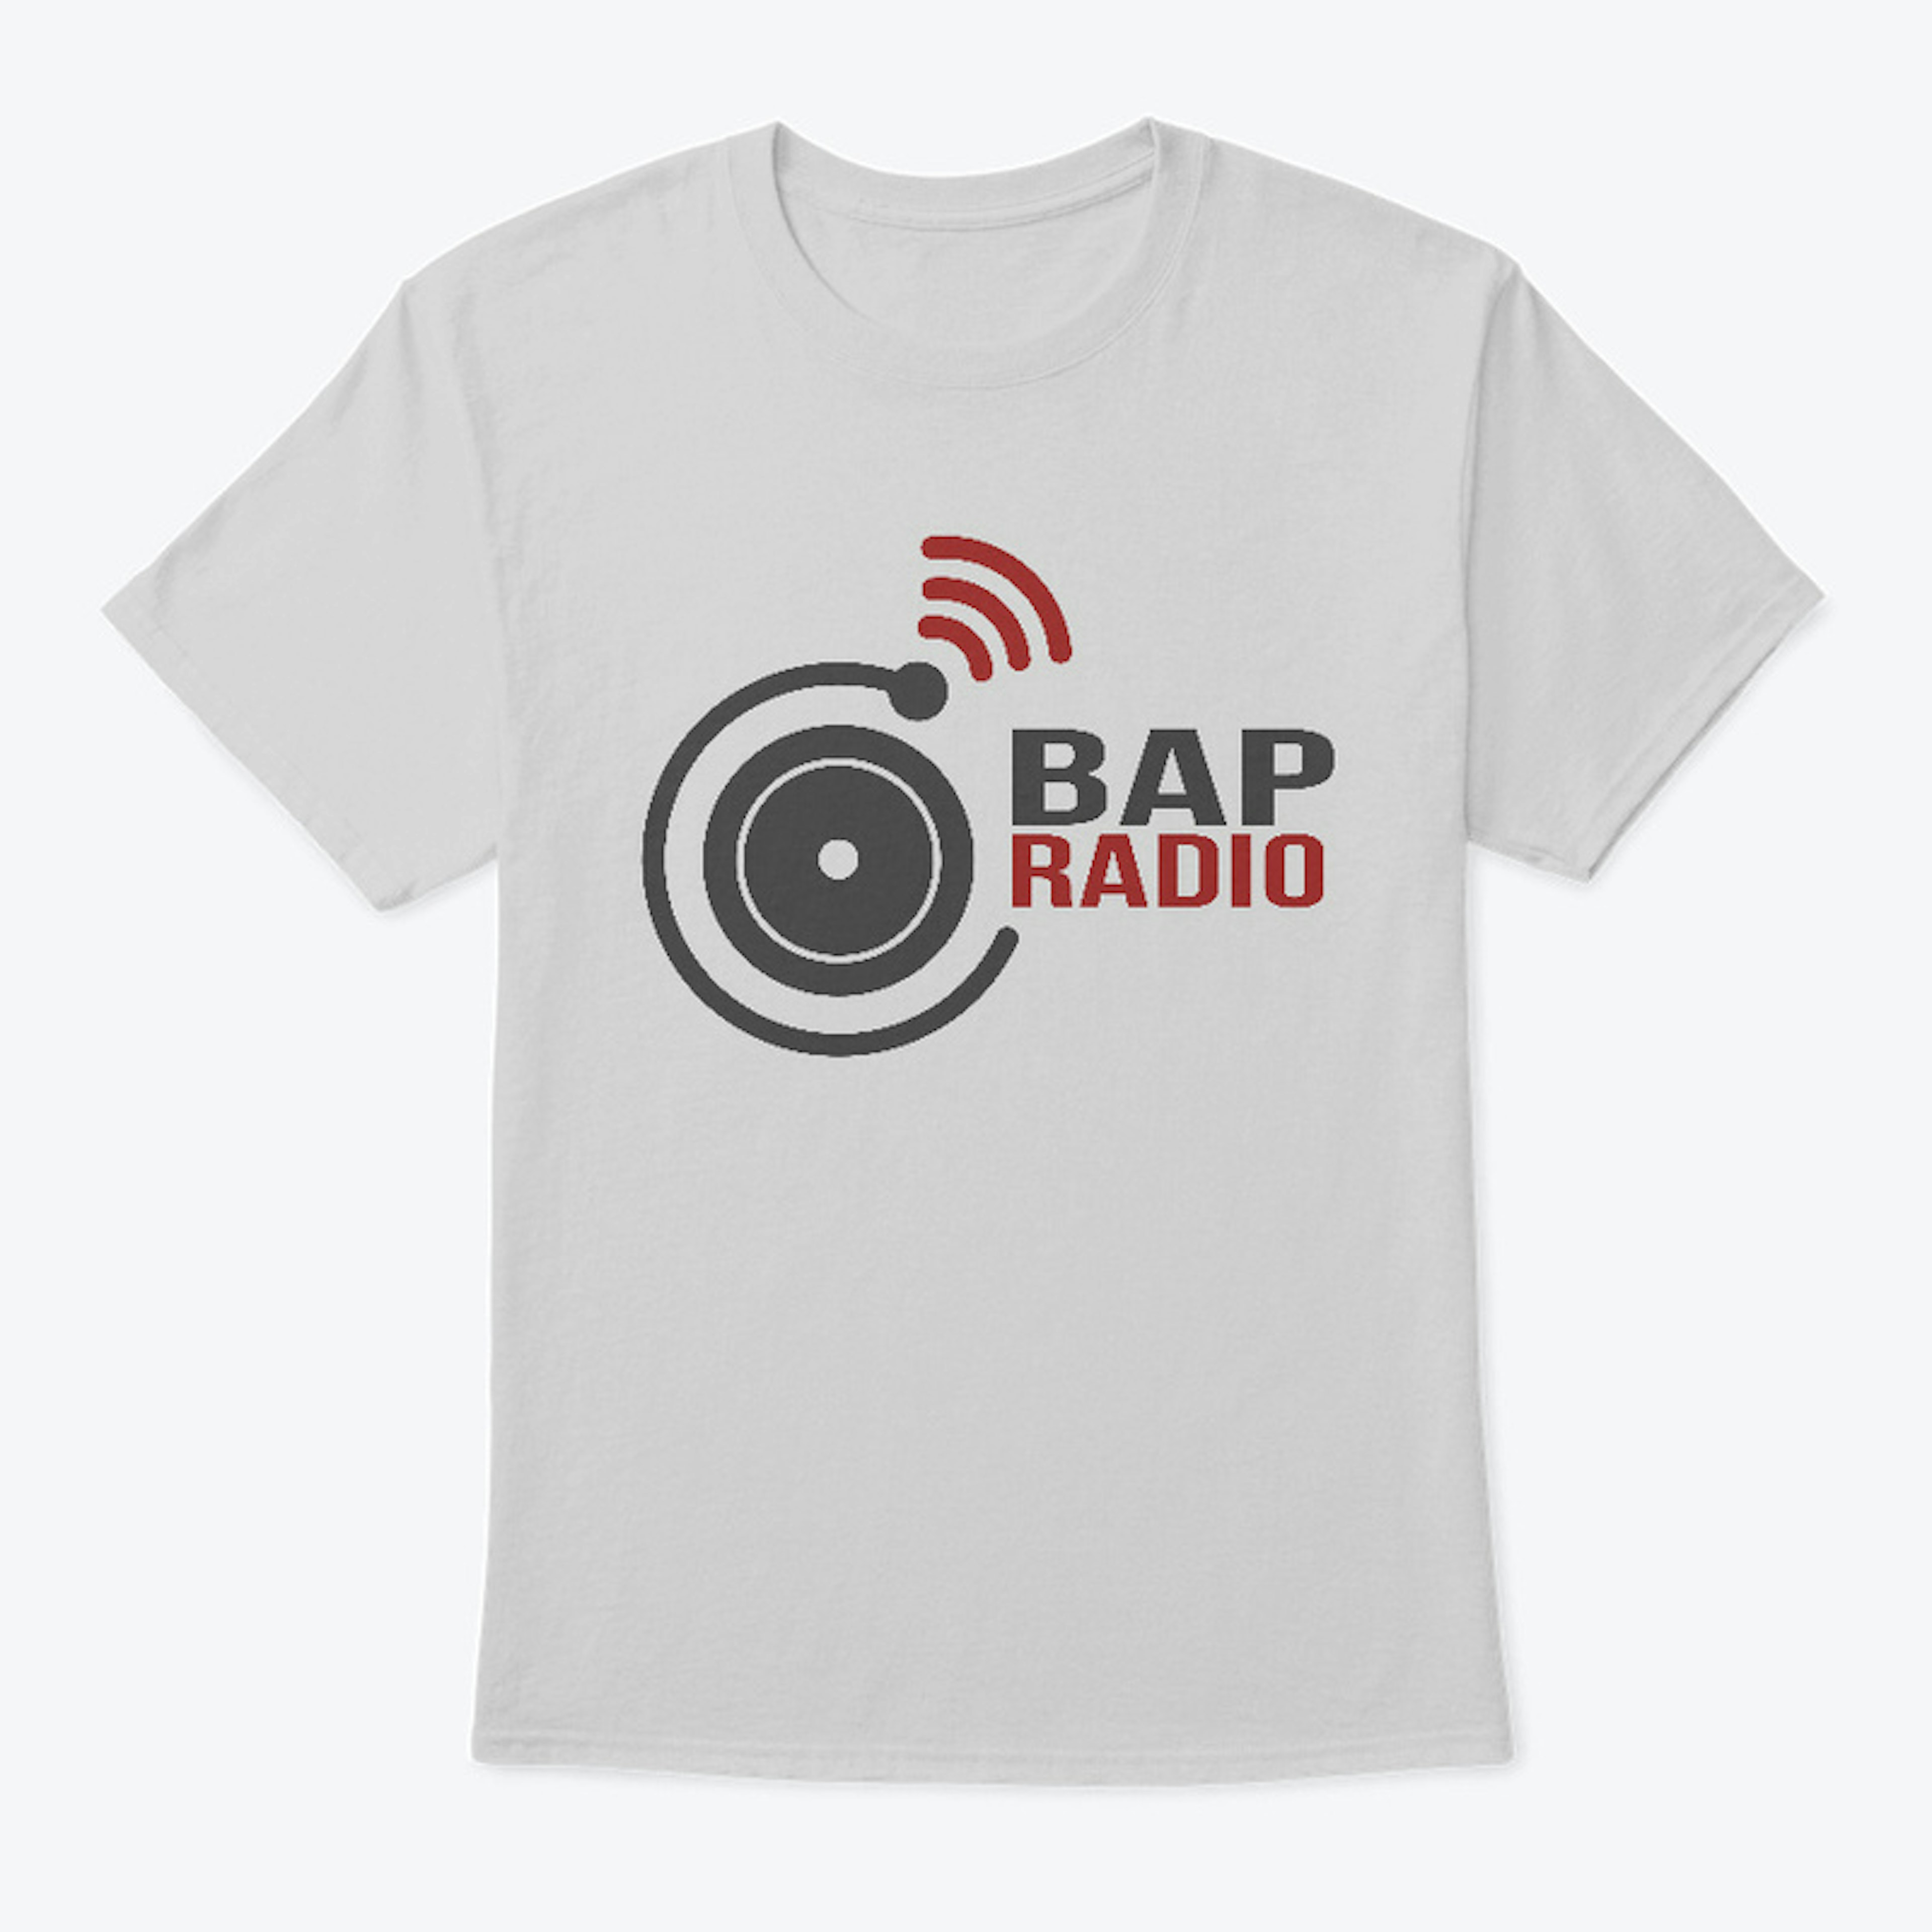 Bap Radio